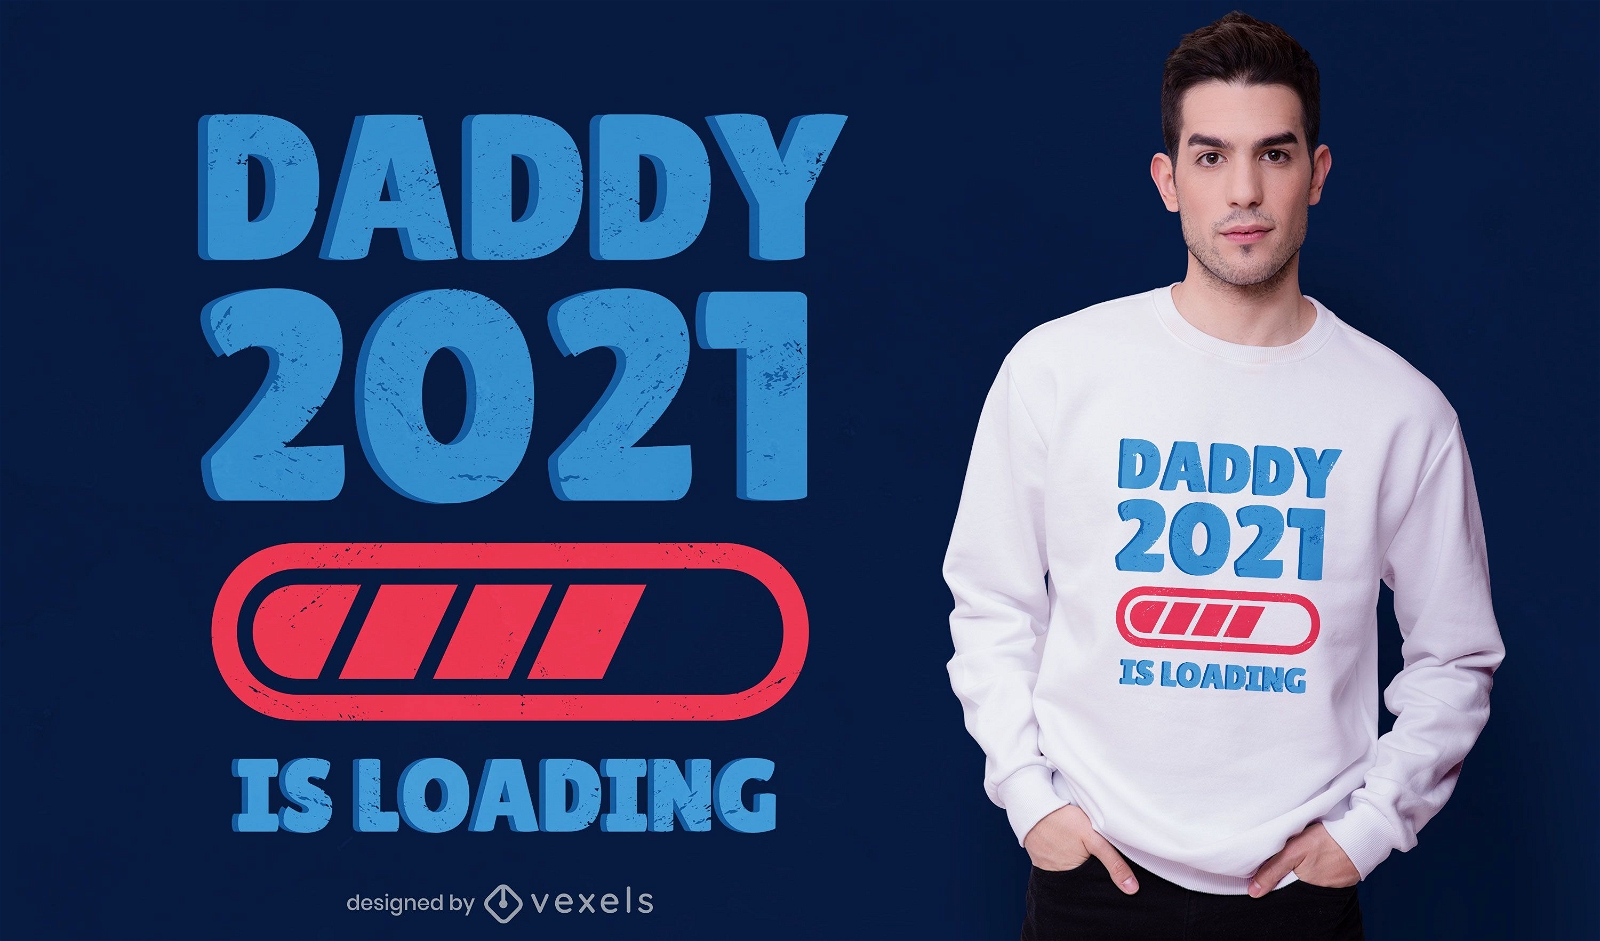 Daddy 2021 t-shirt design